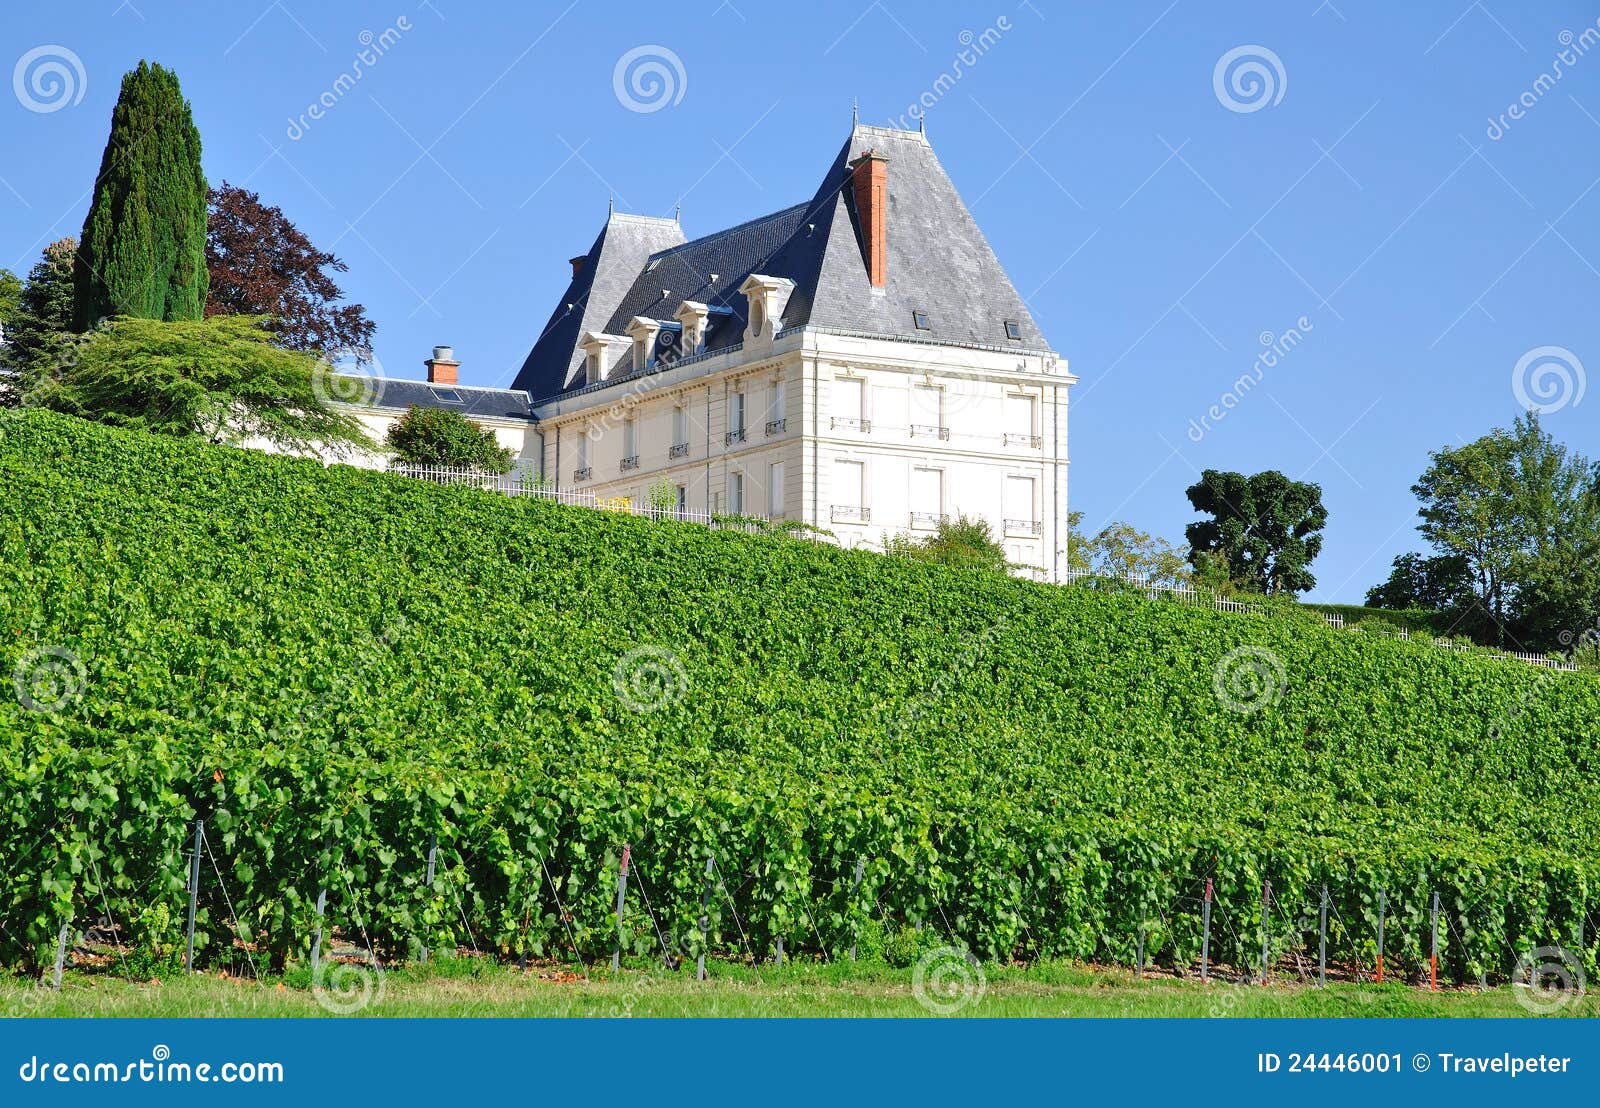 champagne region near epernay,france